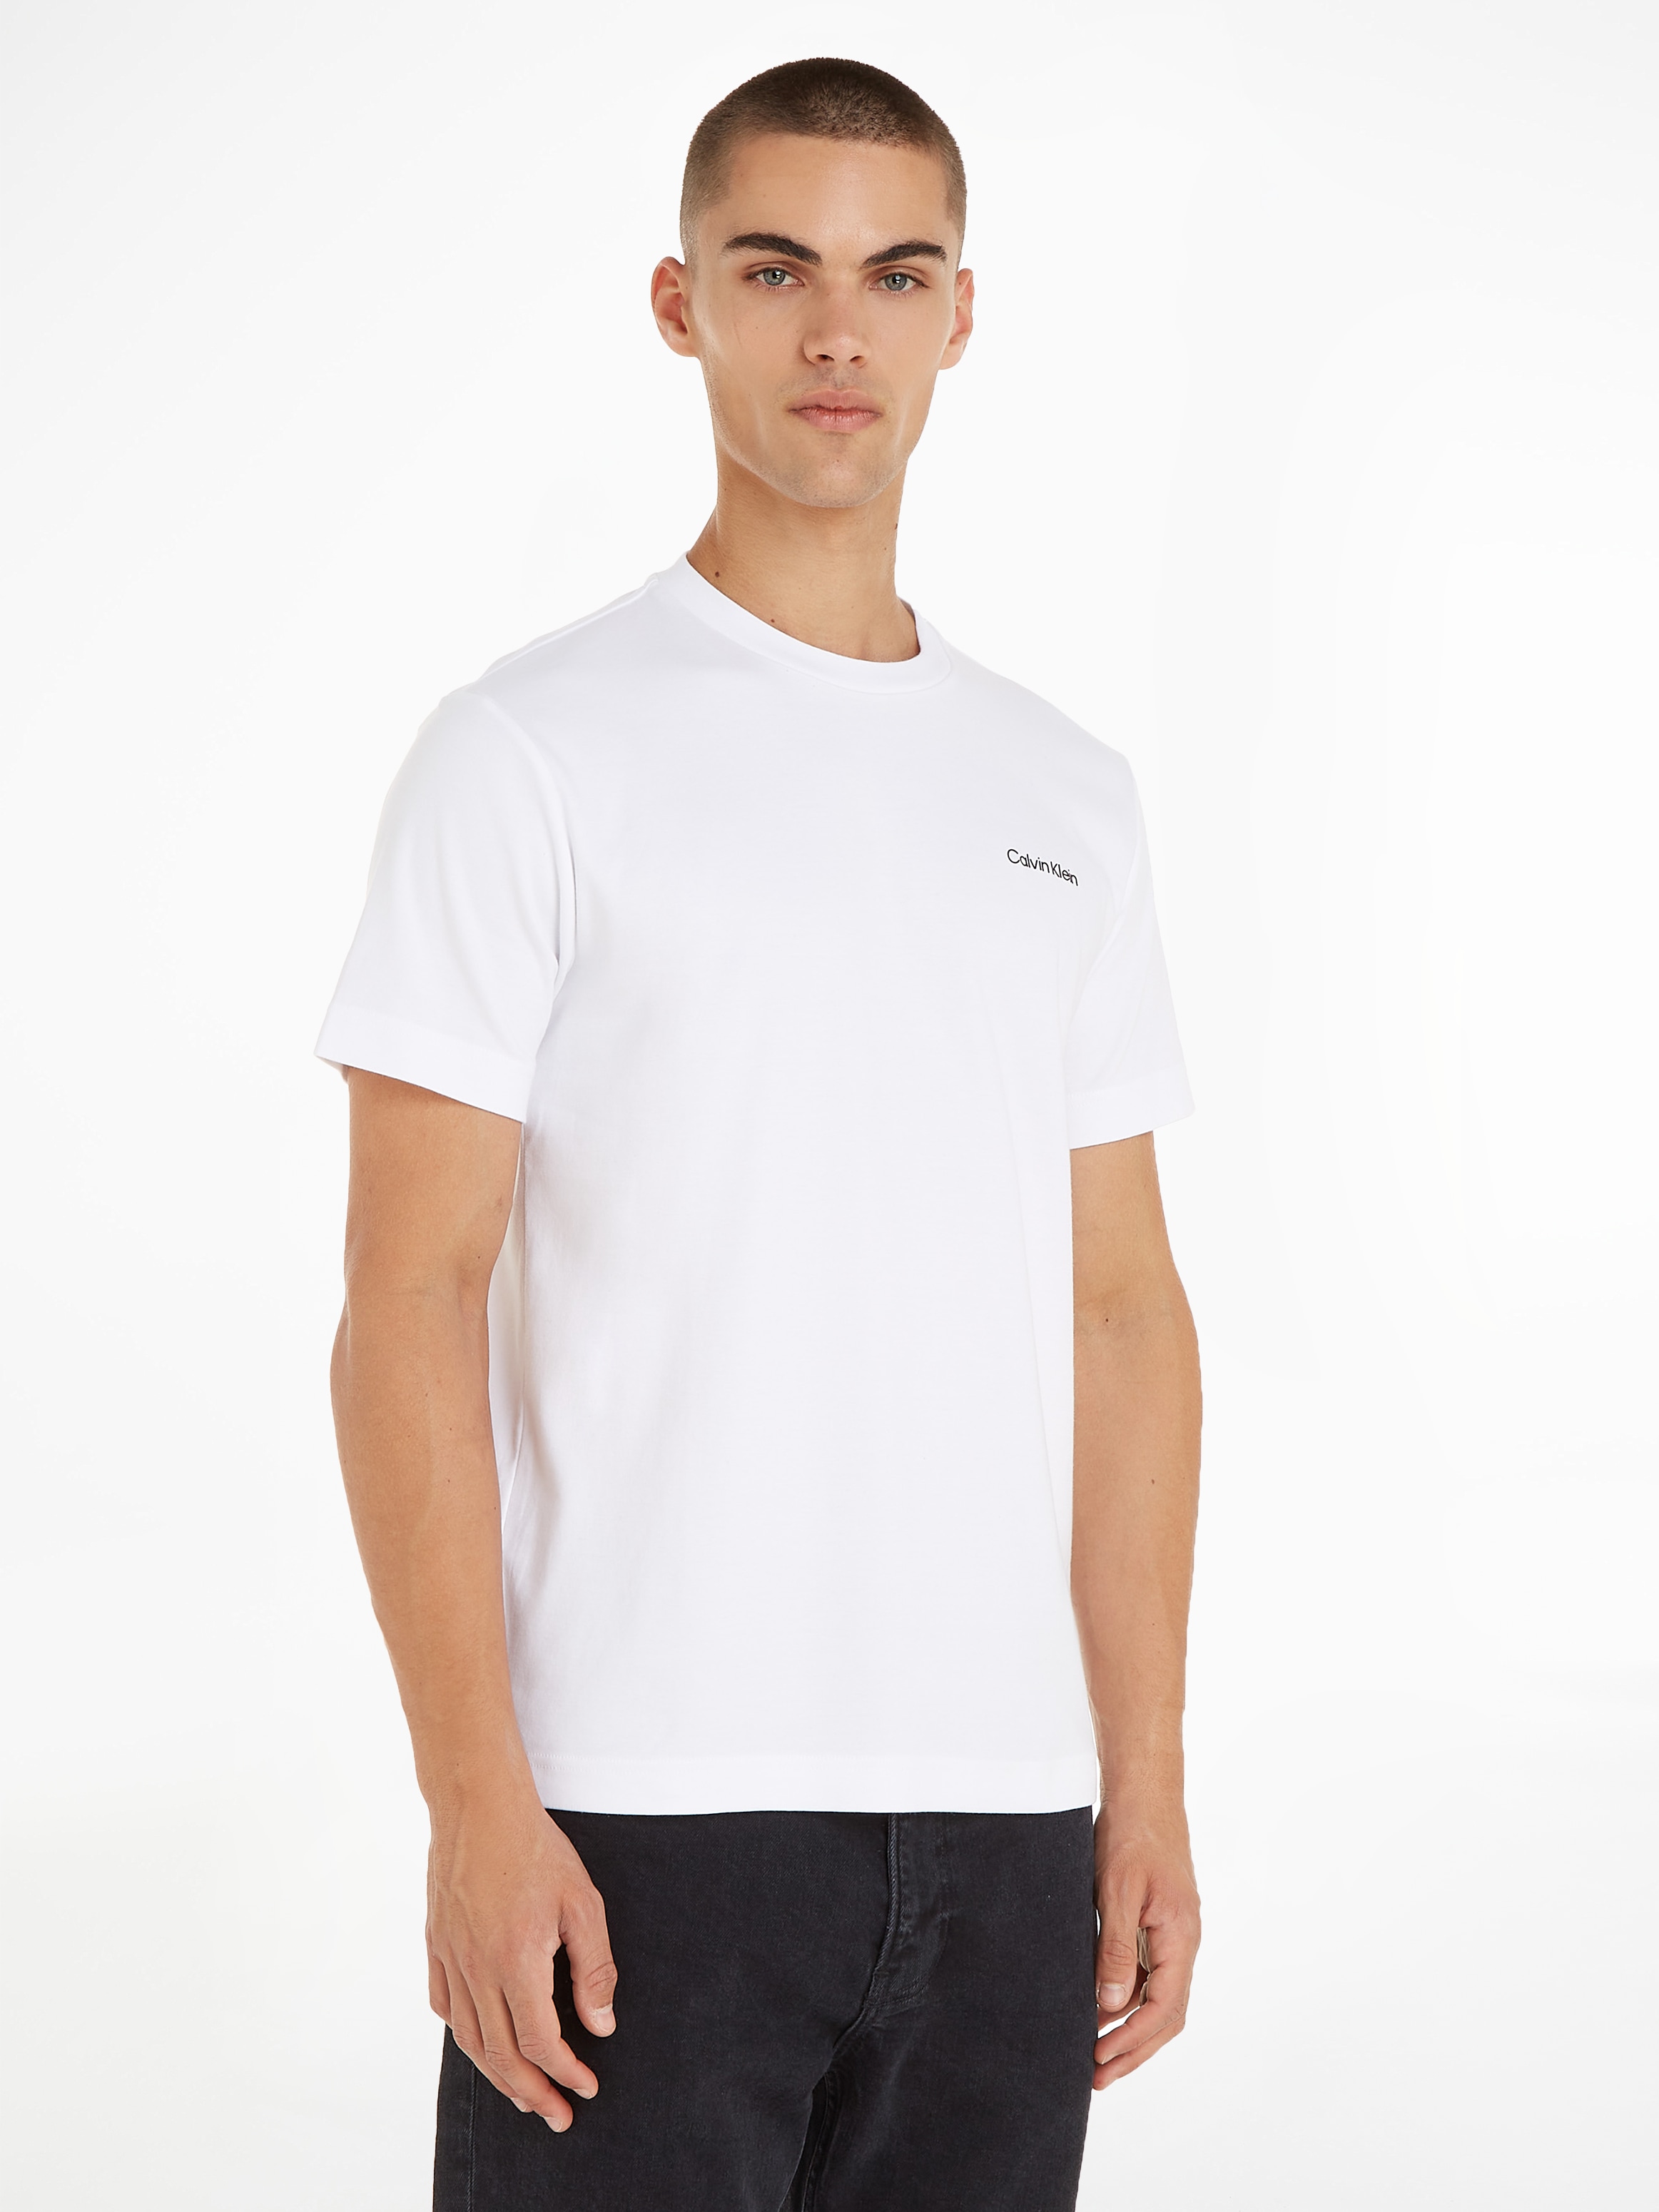 Calvin Klein T-Shirt »Micro Logo«, aus dickem Winterjersey bei ♕